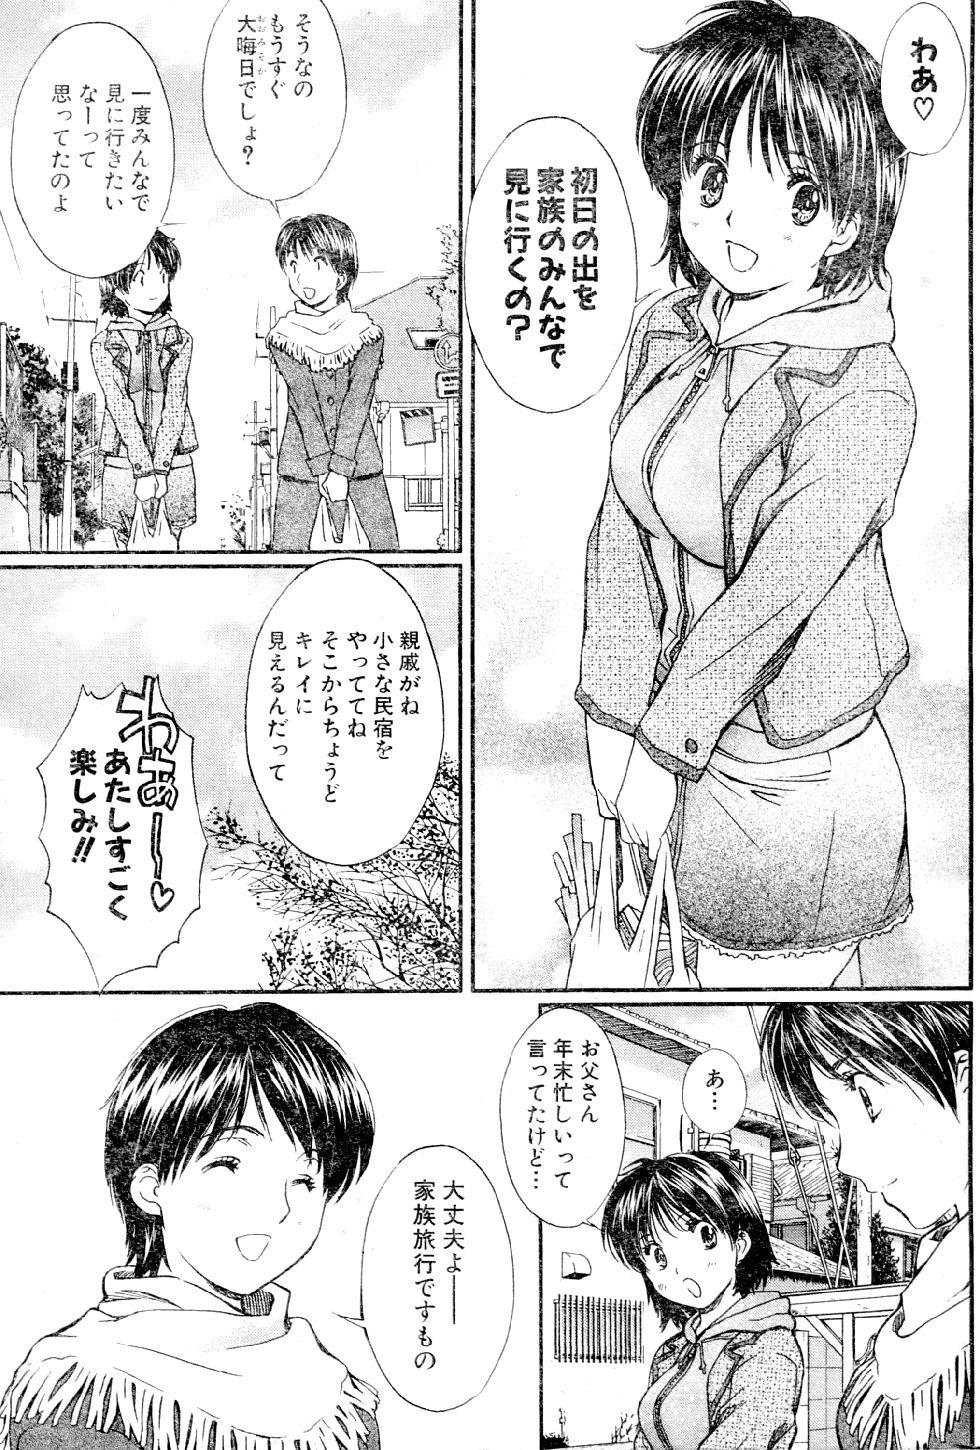 [Hiyoko Kobayashi] Hiyoko Brand Okusama wa Joshikousei Vol. 13 [こばやしひよこ] HIYOKO BRANDおくさまは女子高生 第13巻